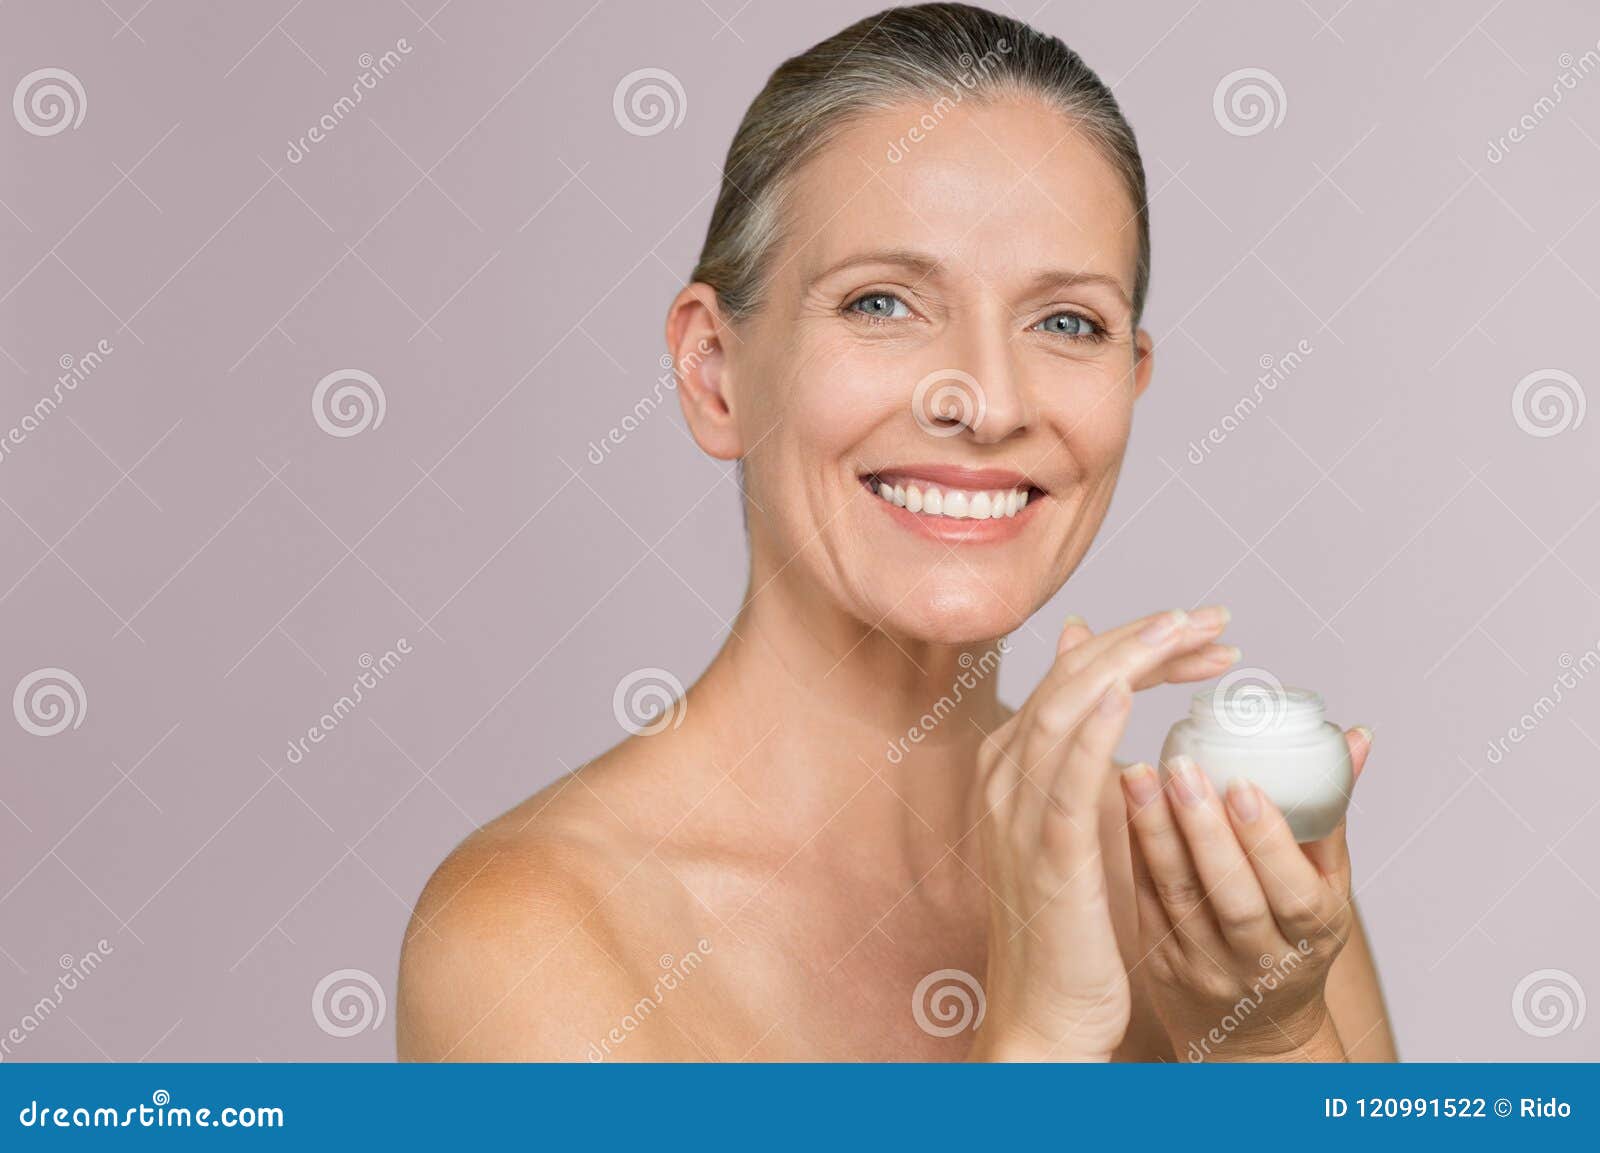 woman holding jar of moisturizer